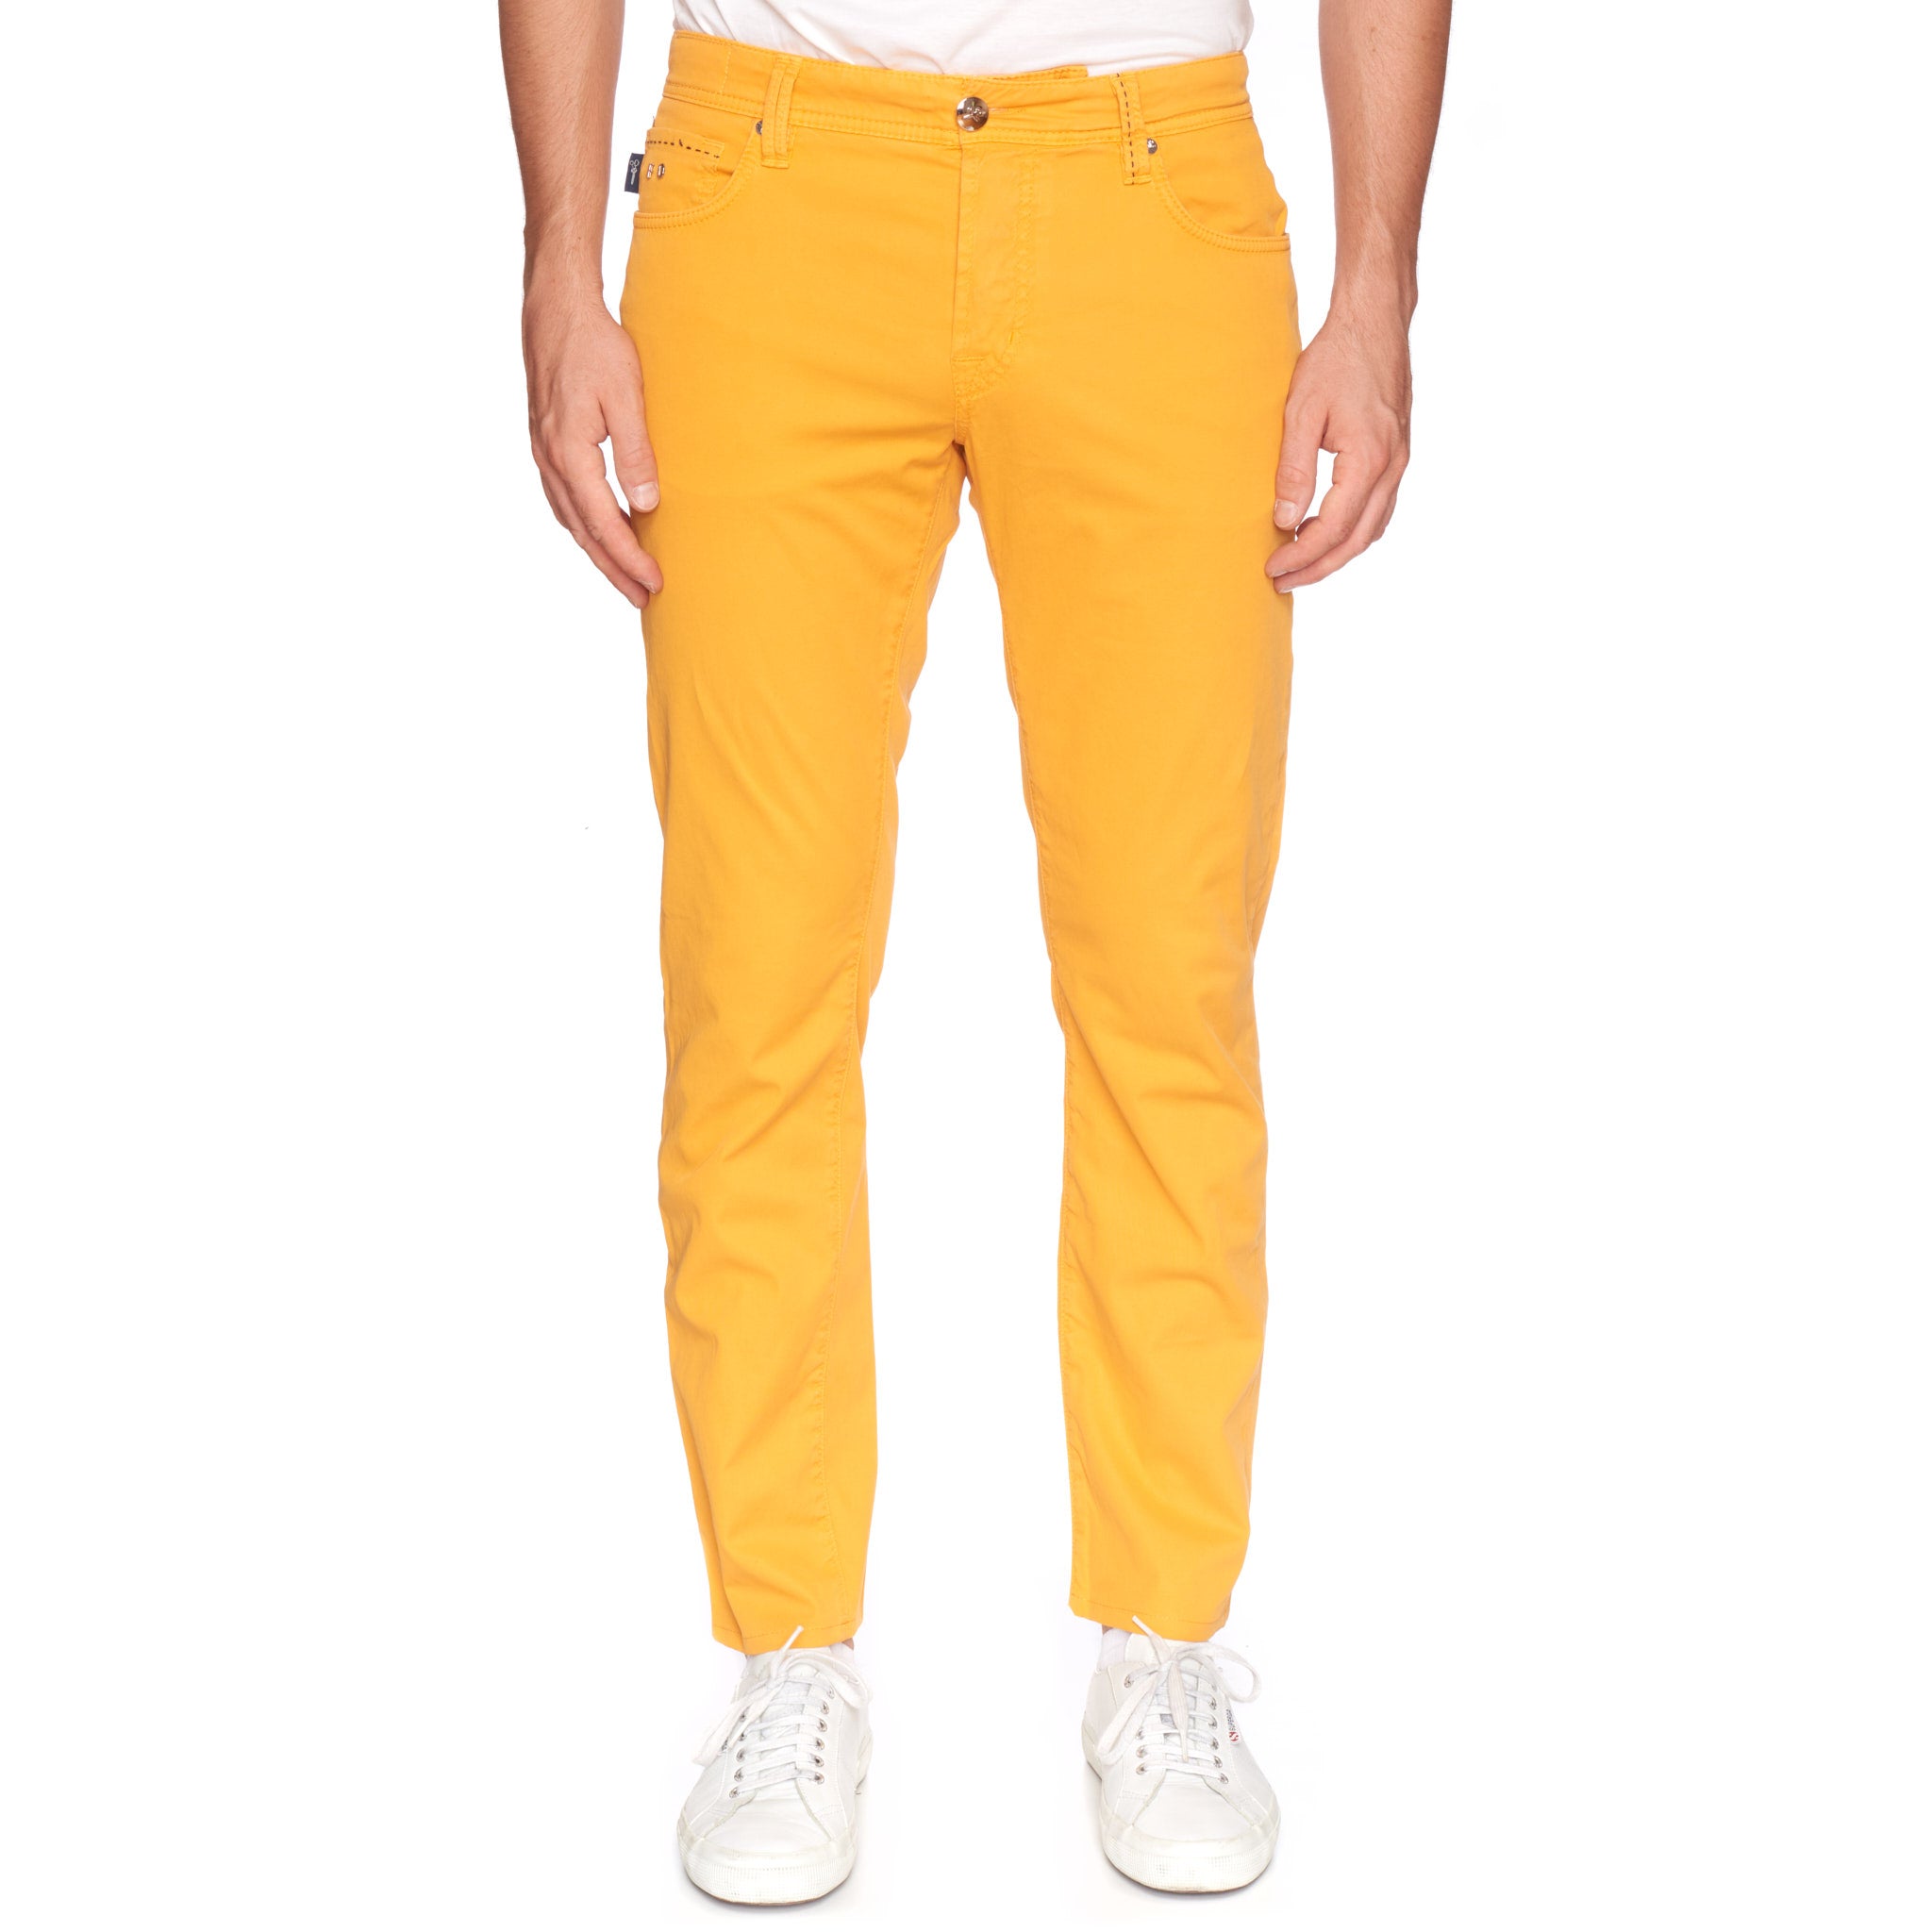 TRAMAROSSA Colour Leonardo Orange Stretch Twill Cotton Slim Fit Jeans Pants US 33 TRAMAROSSA